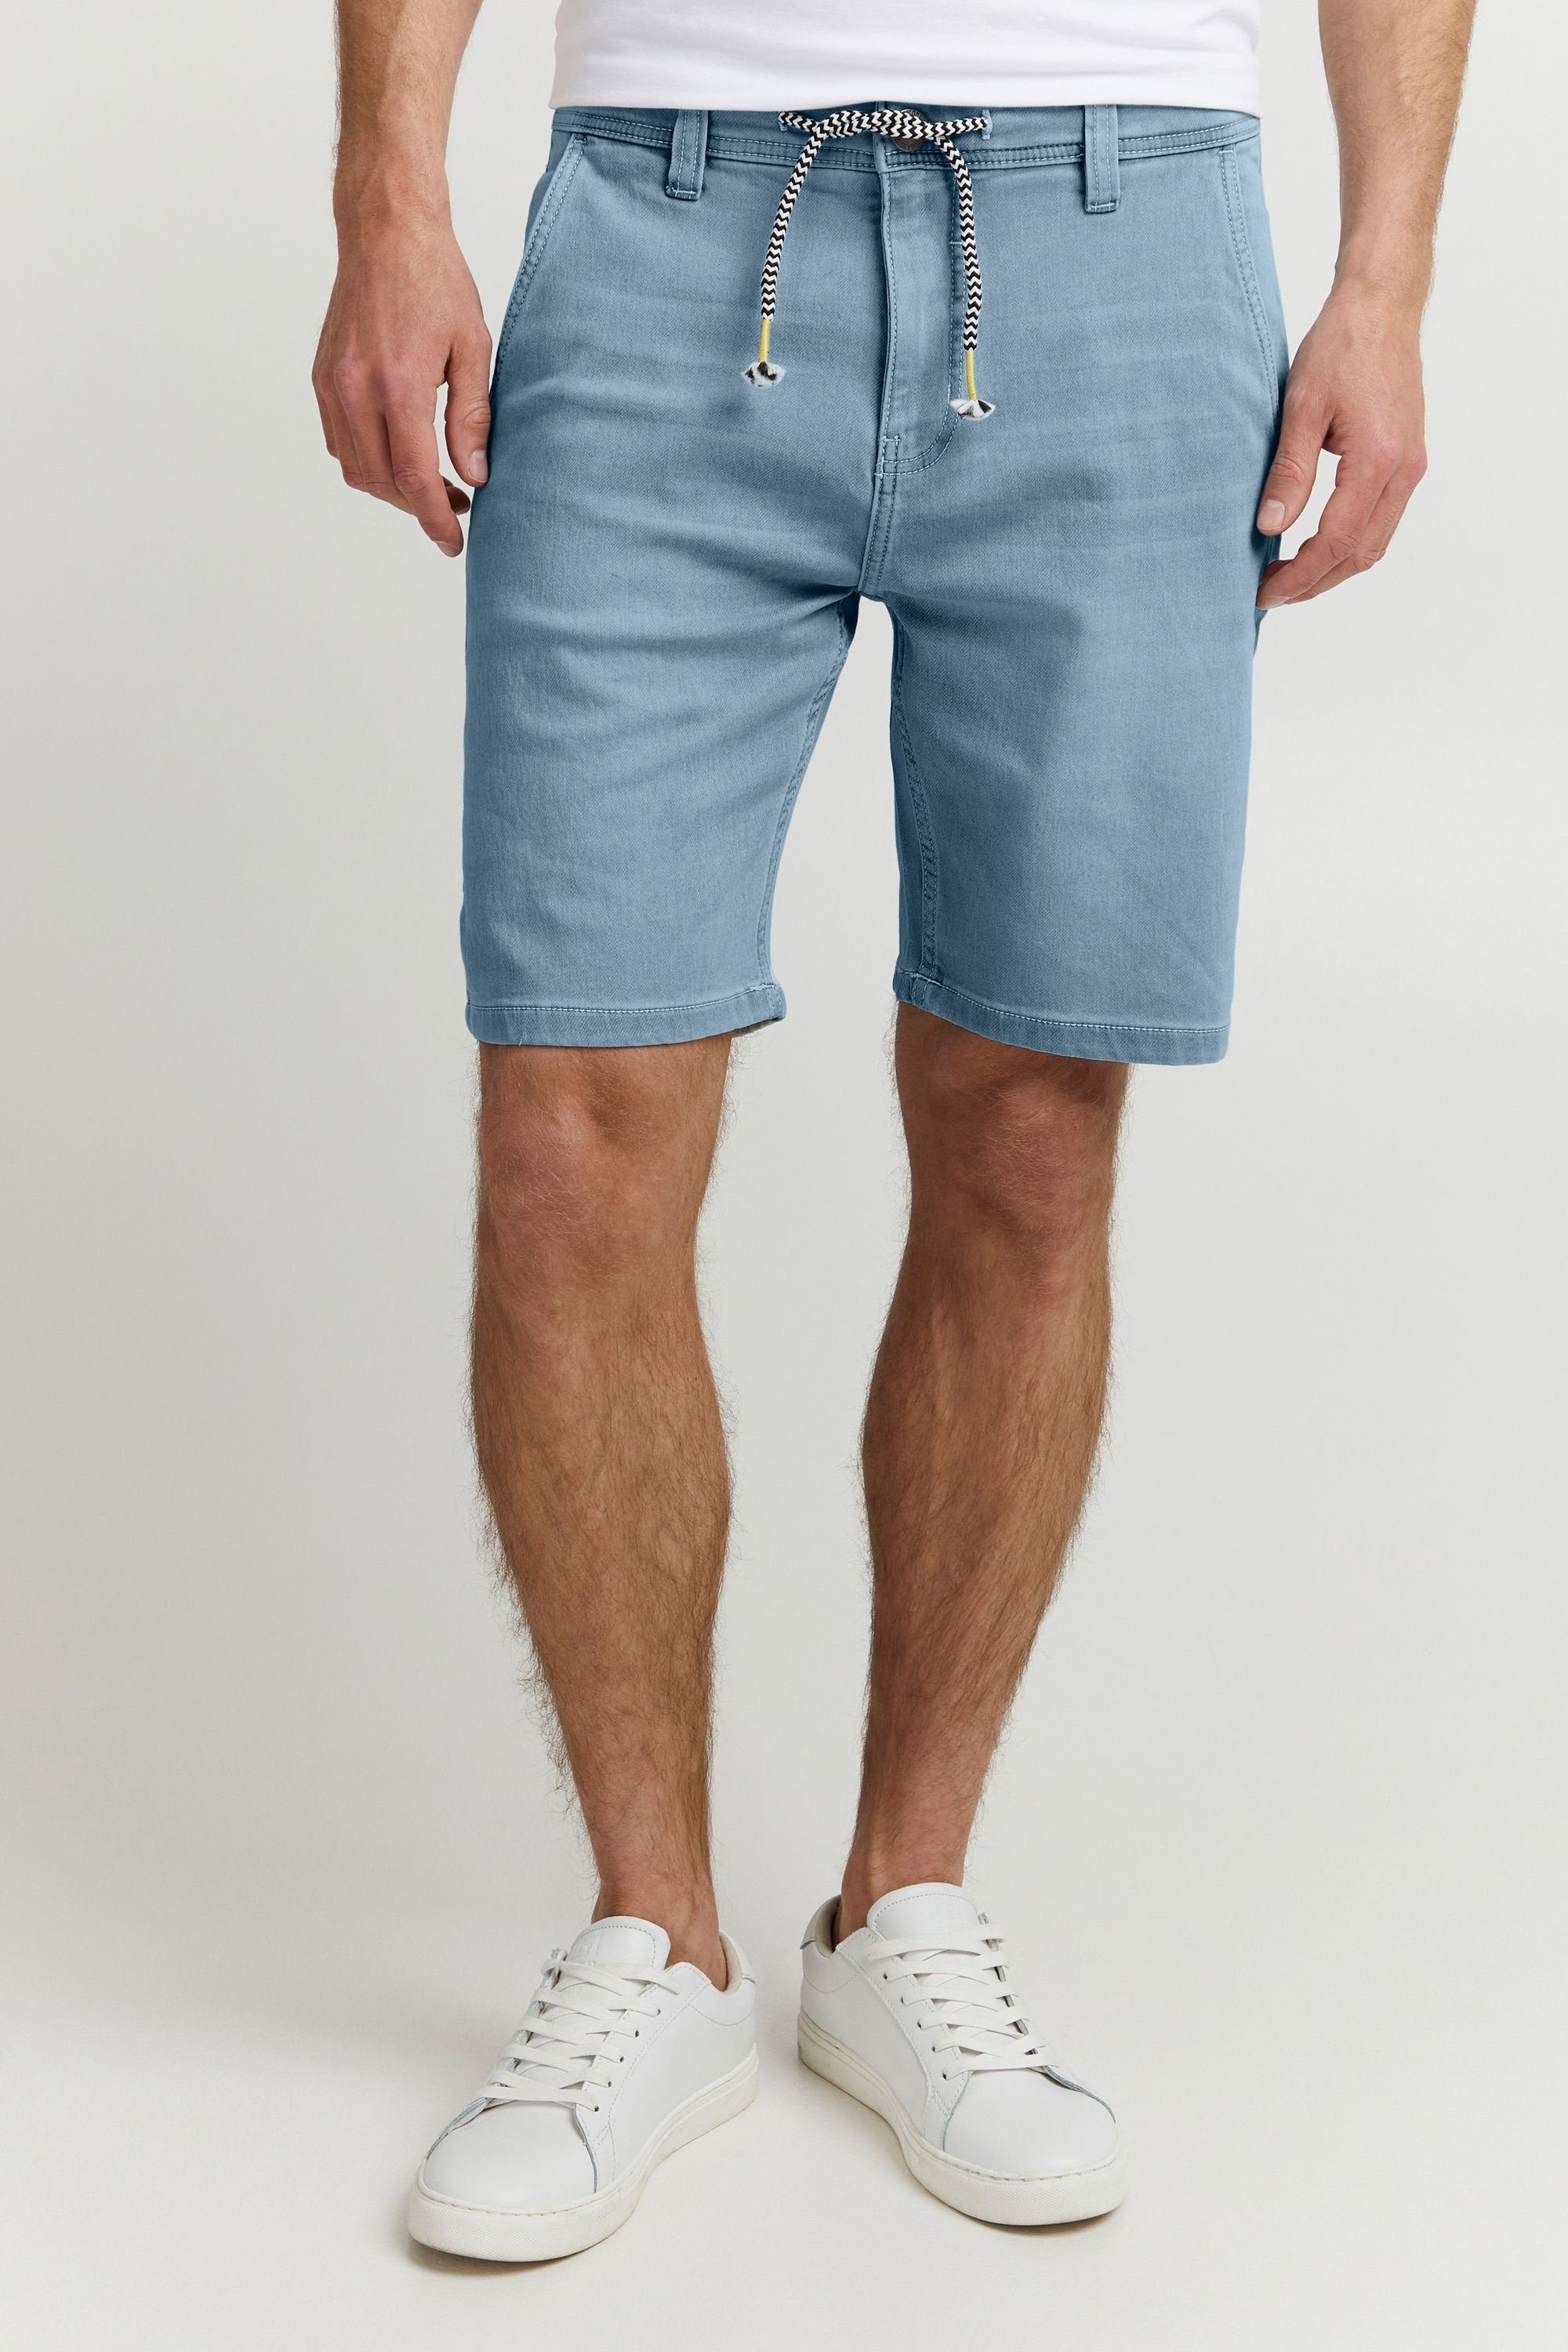 Blue Shorts Indicode (939) IDGodo Dim